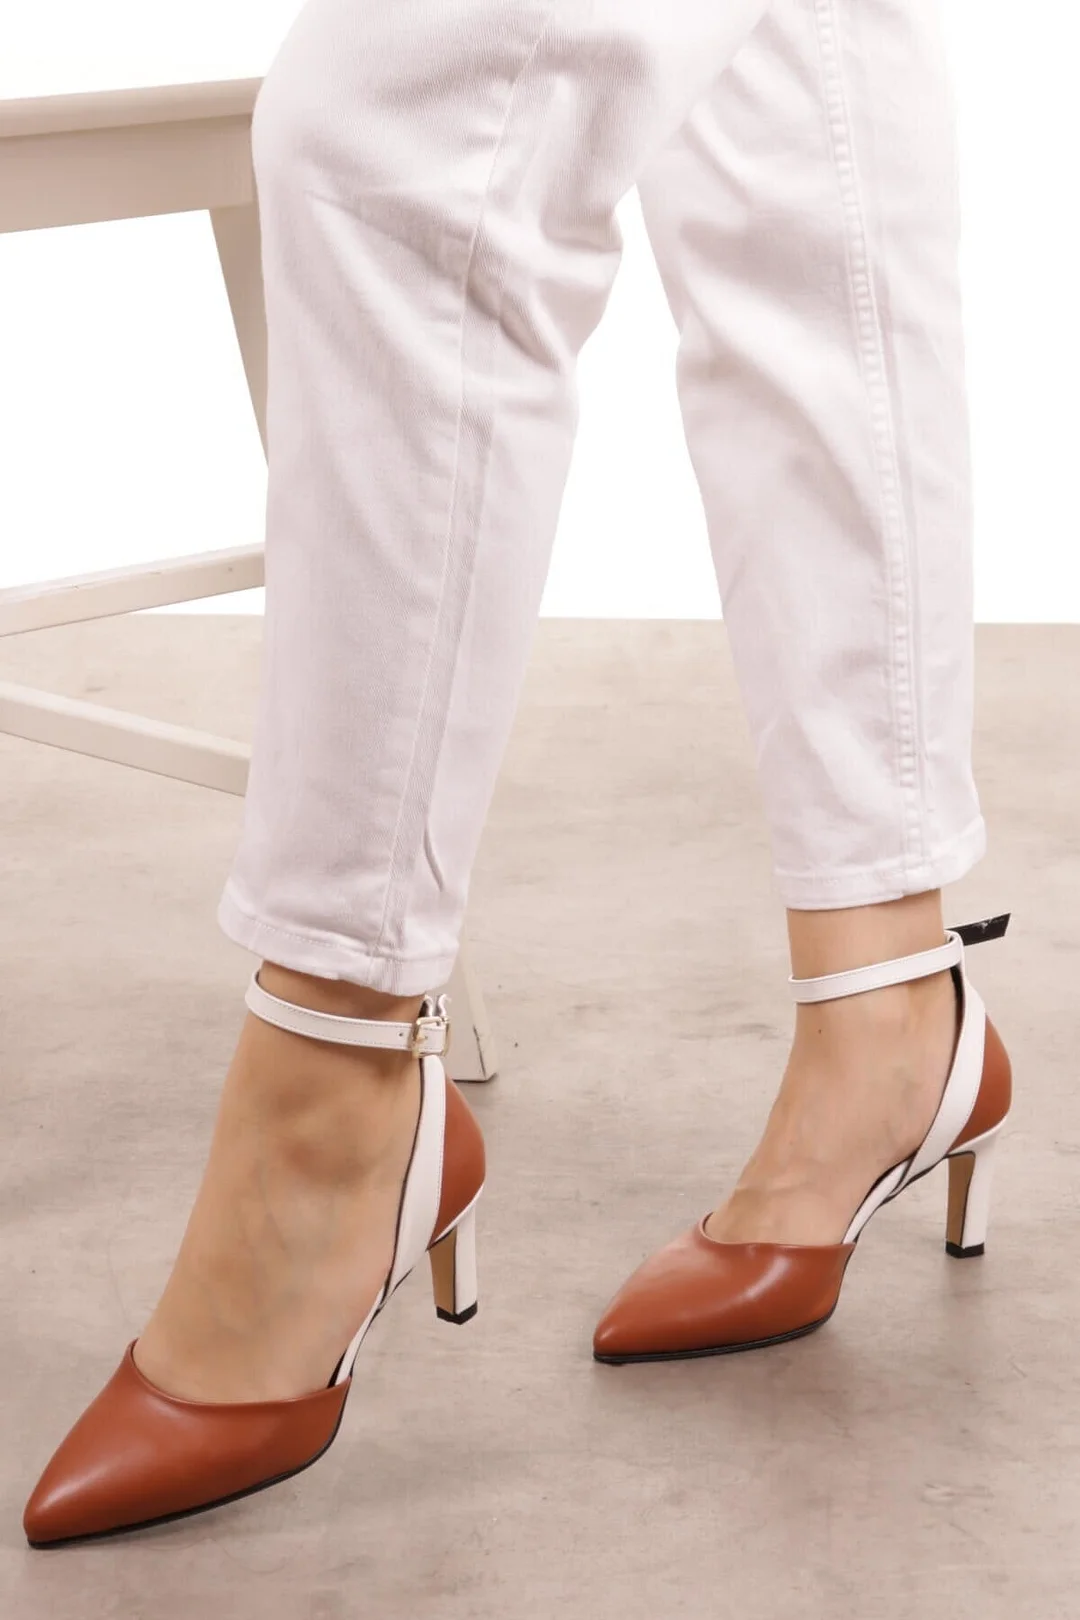 Mio Gusto Brand Luna Skin, White, Tan Colors High Quality 6Cm Heel Height Women 's Fashion Pumps